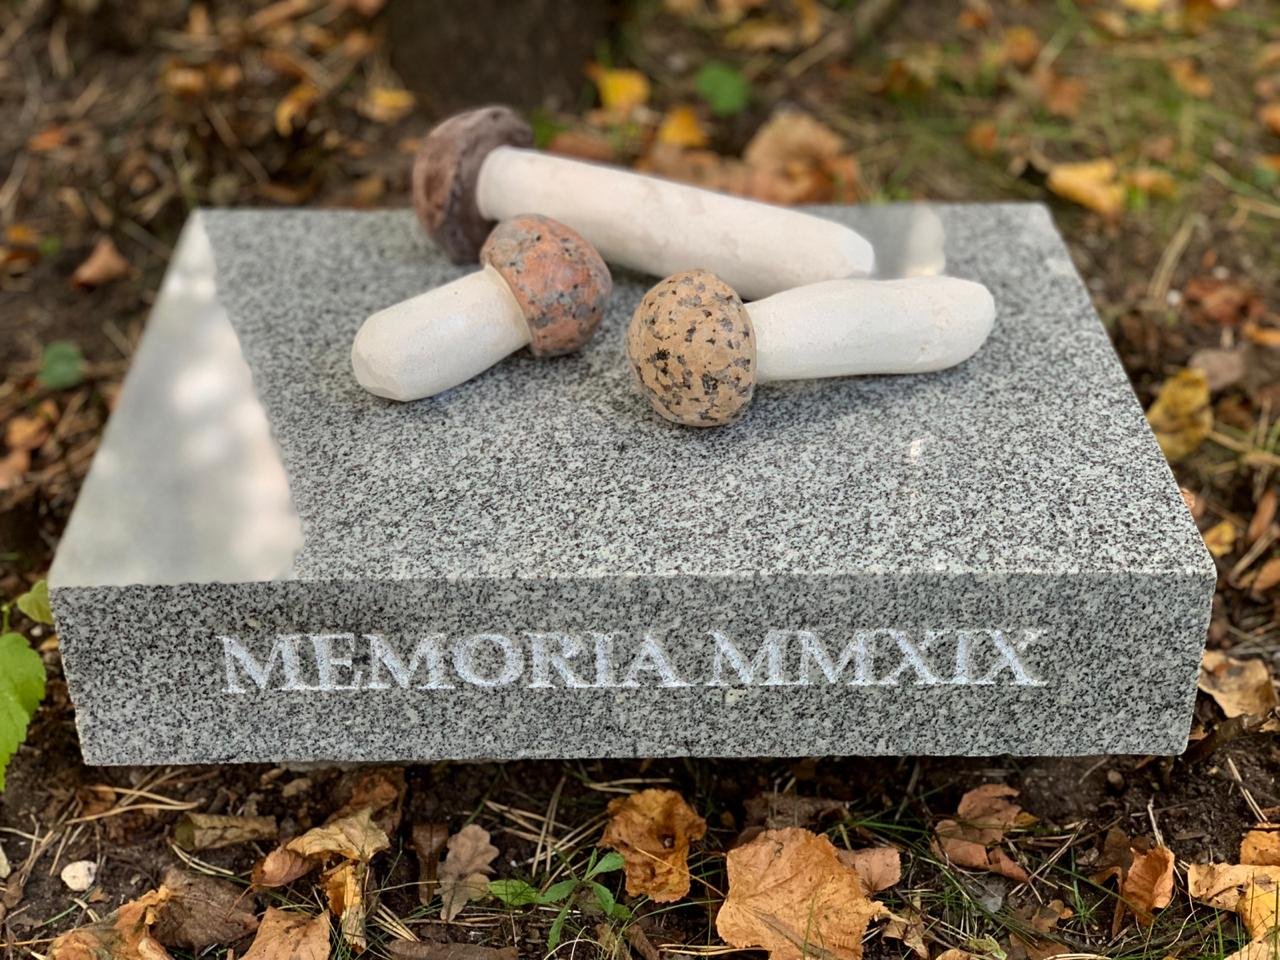 In memory of 2019. Birch mushrooms gravestone